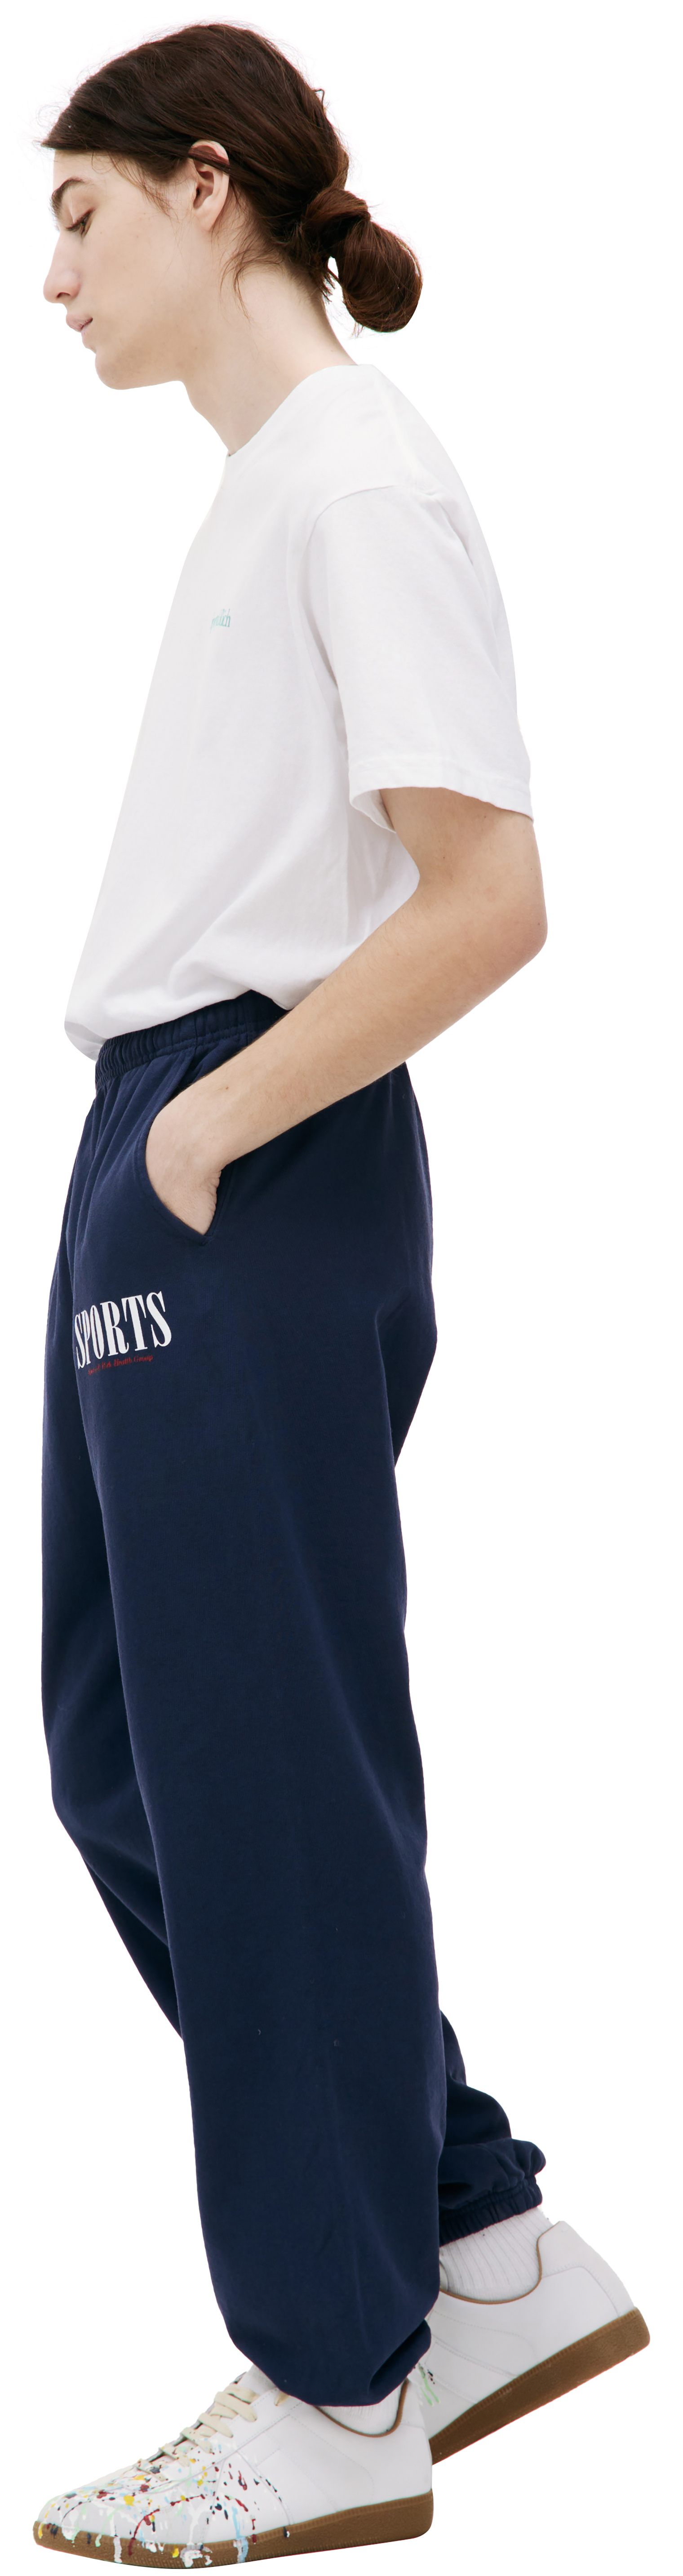 SPORTY & RICH \'Health Club\' printed sweatpants